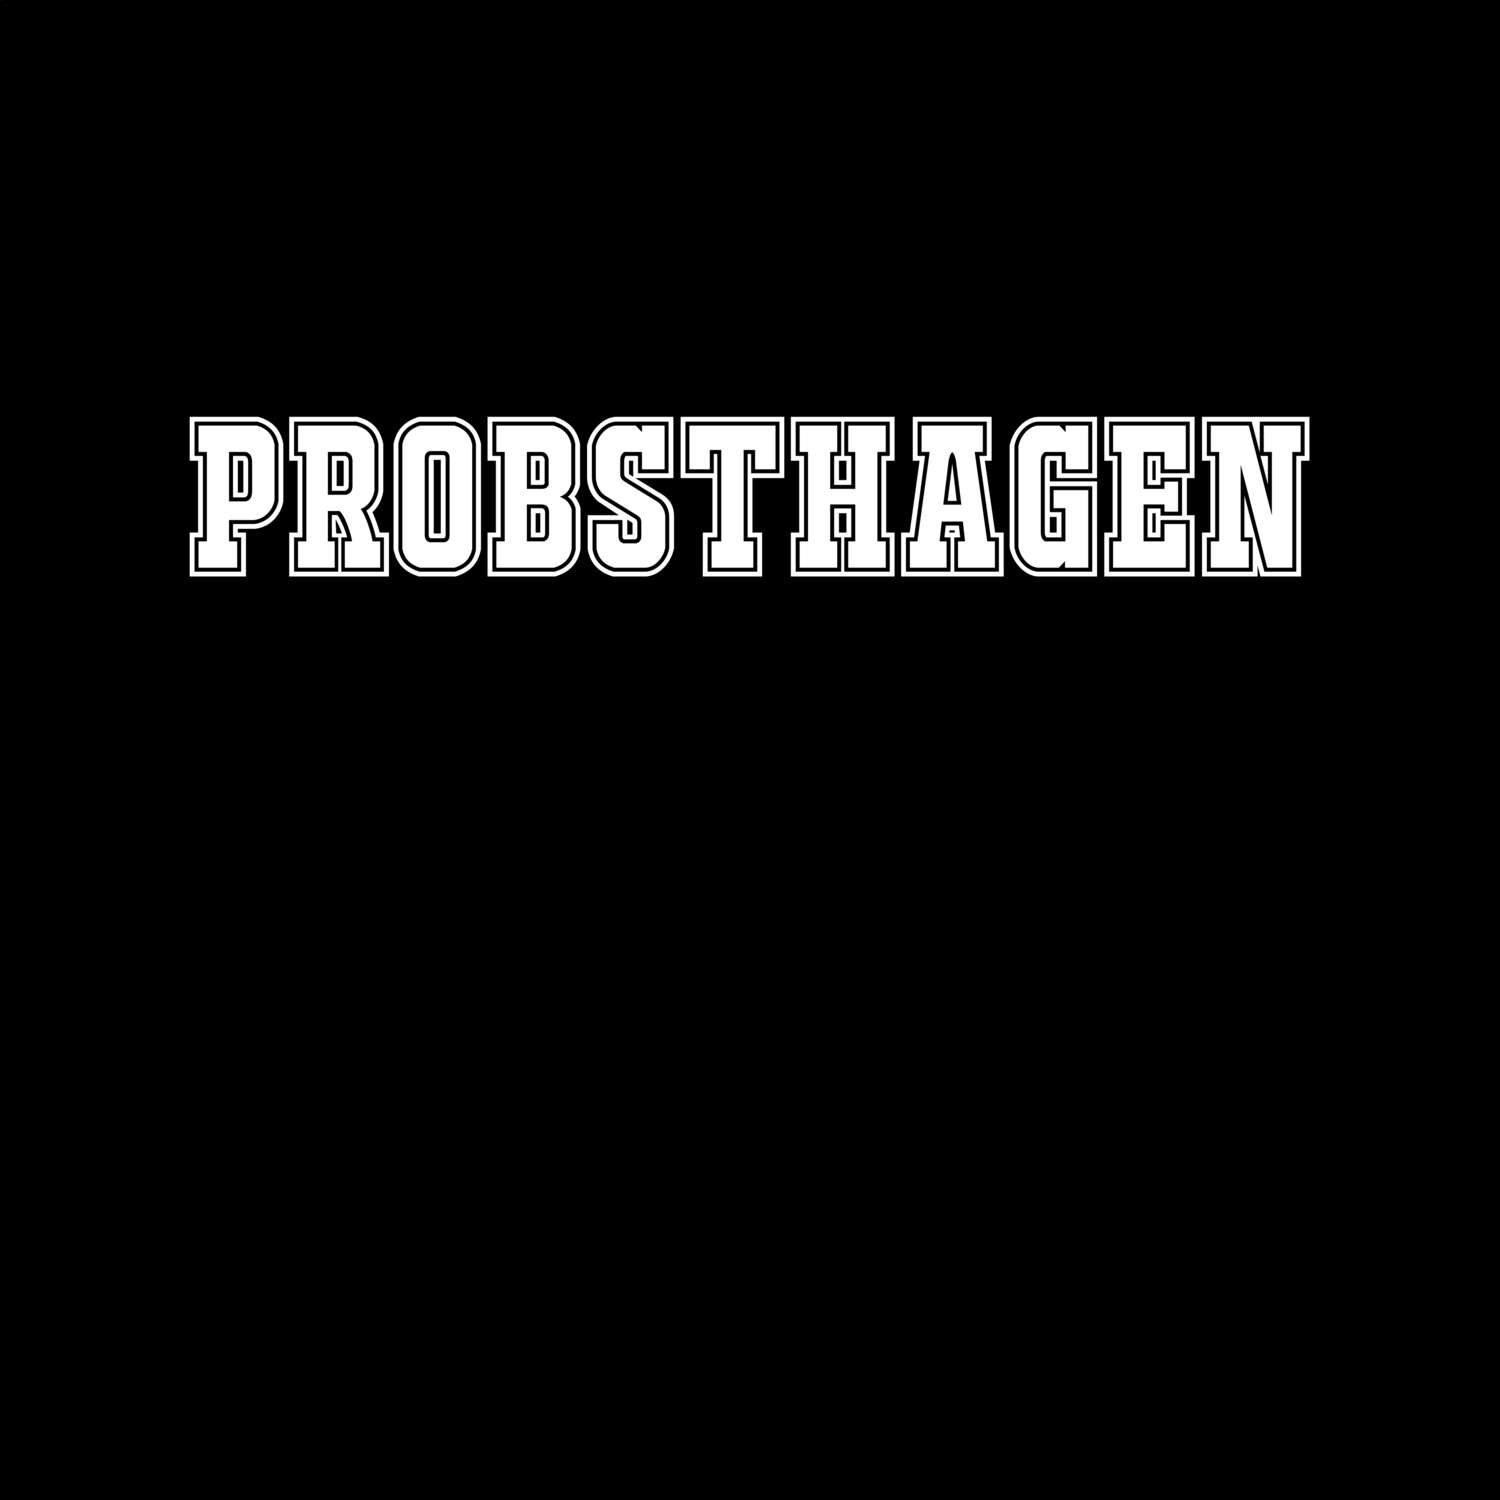 Probsthagen T-Shirt »Classic«